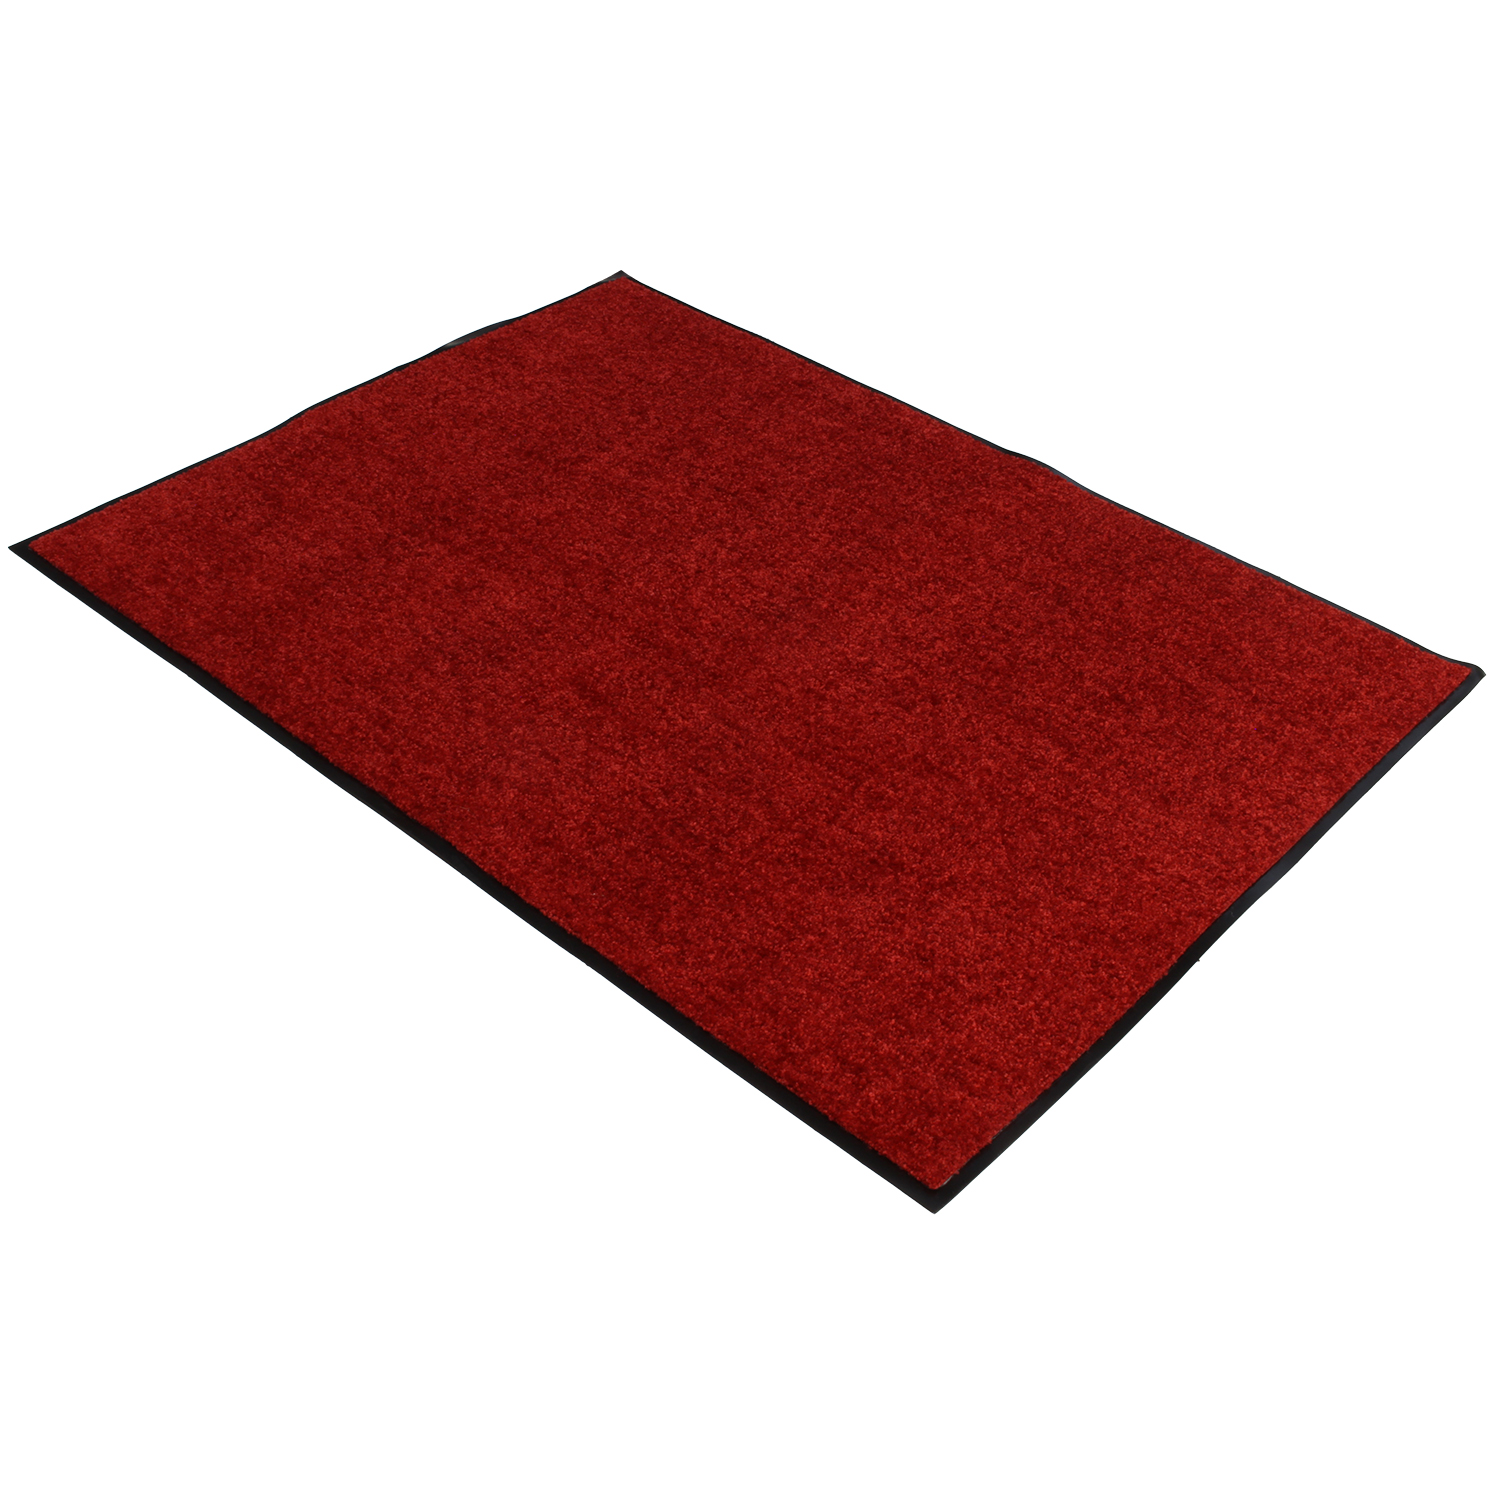 Droogloopmat - Rood - 120 x 180 cm - Rubberen onderrug - 1,5 cm rand - Wash & Clean